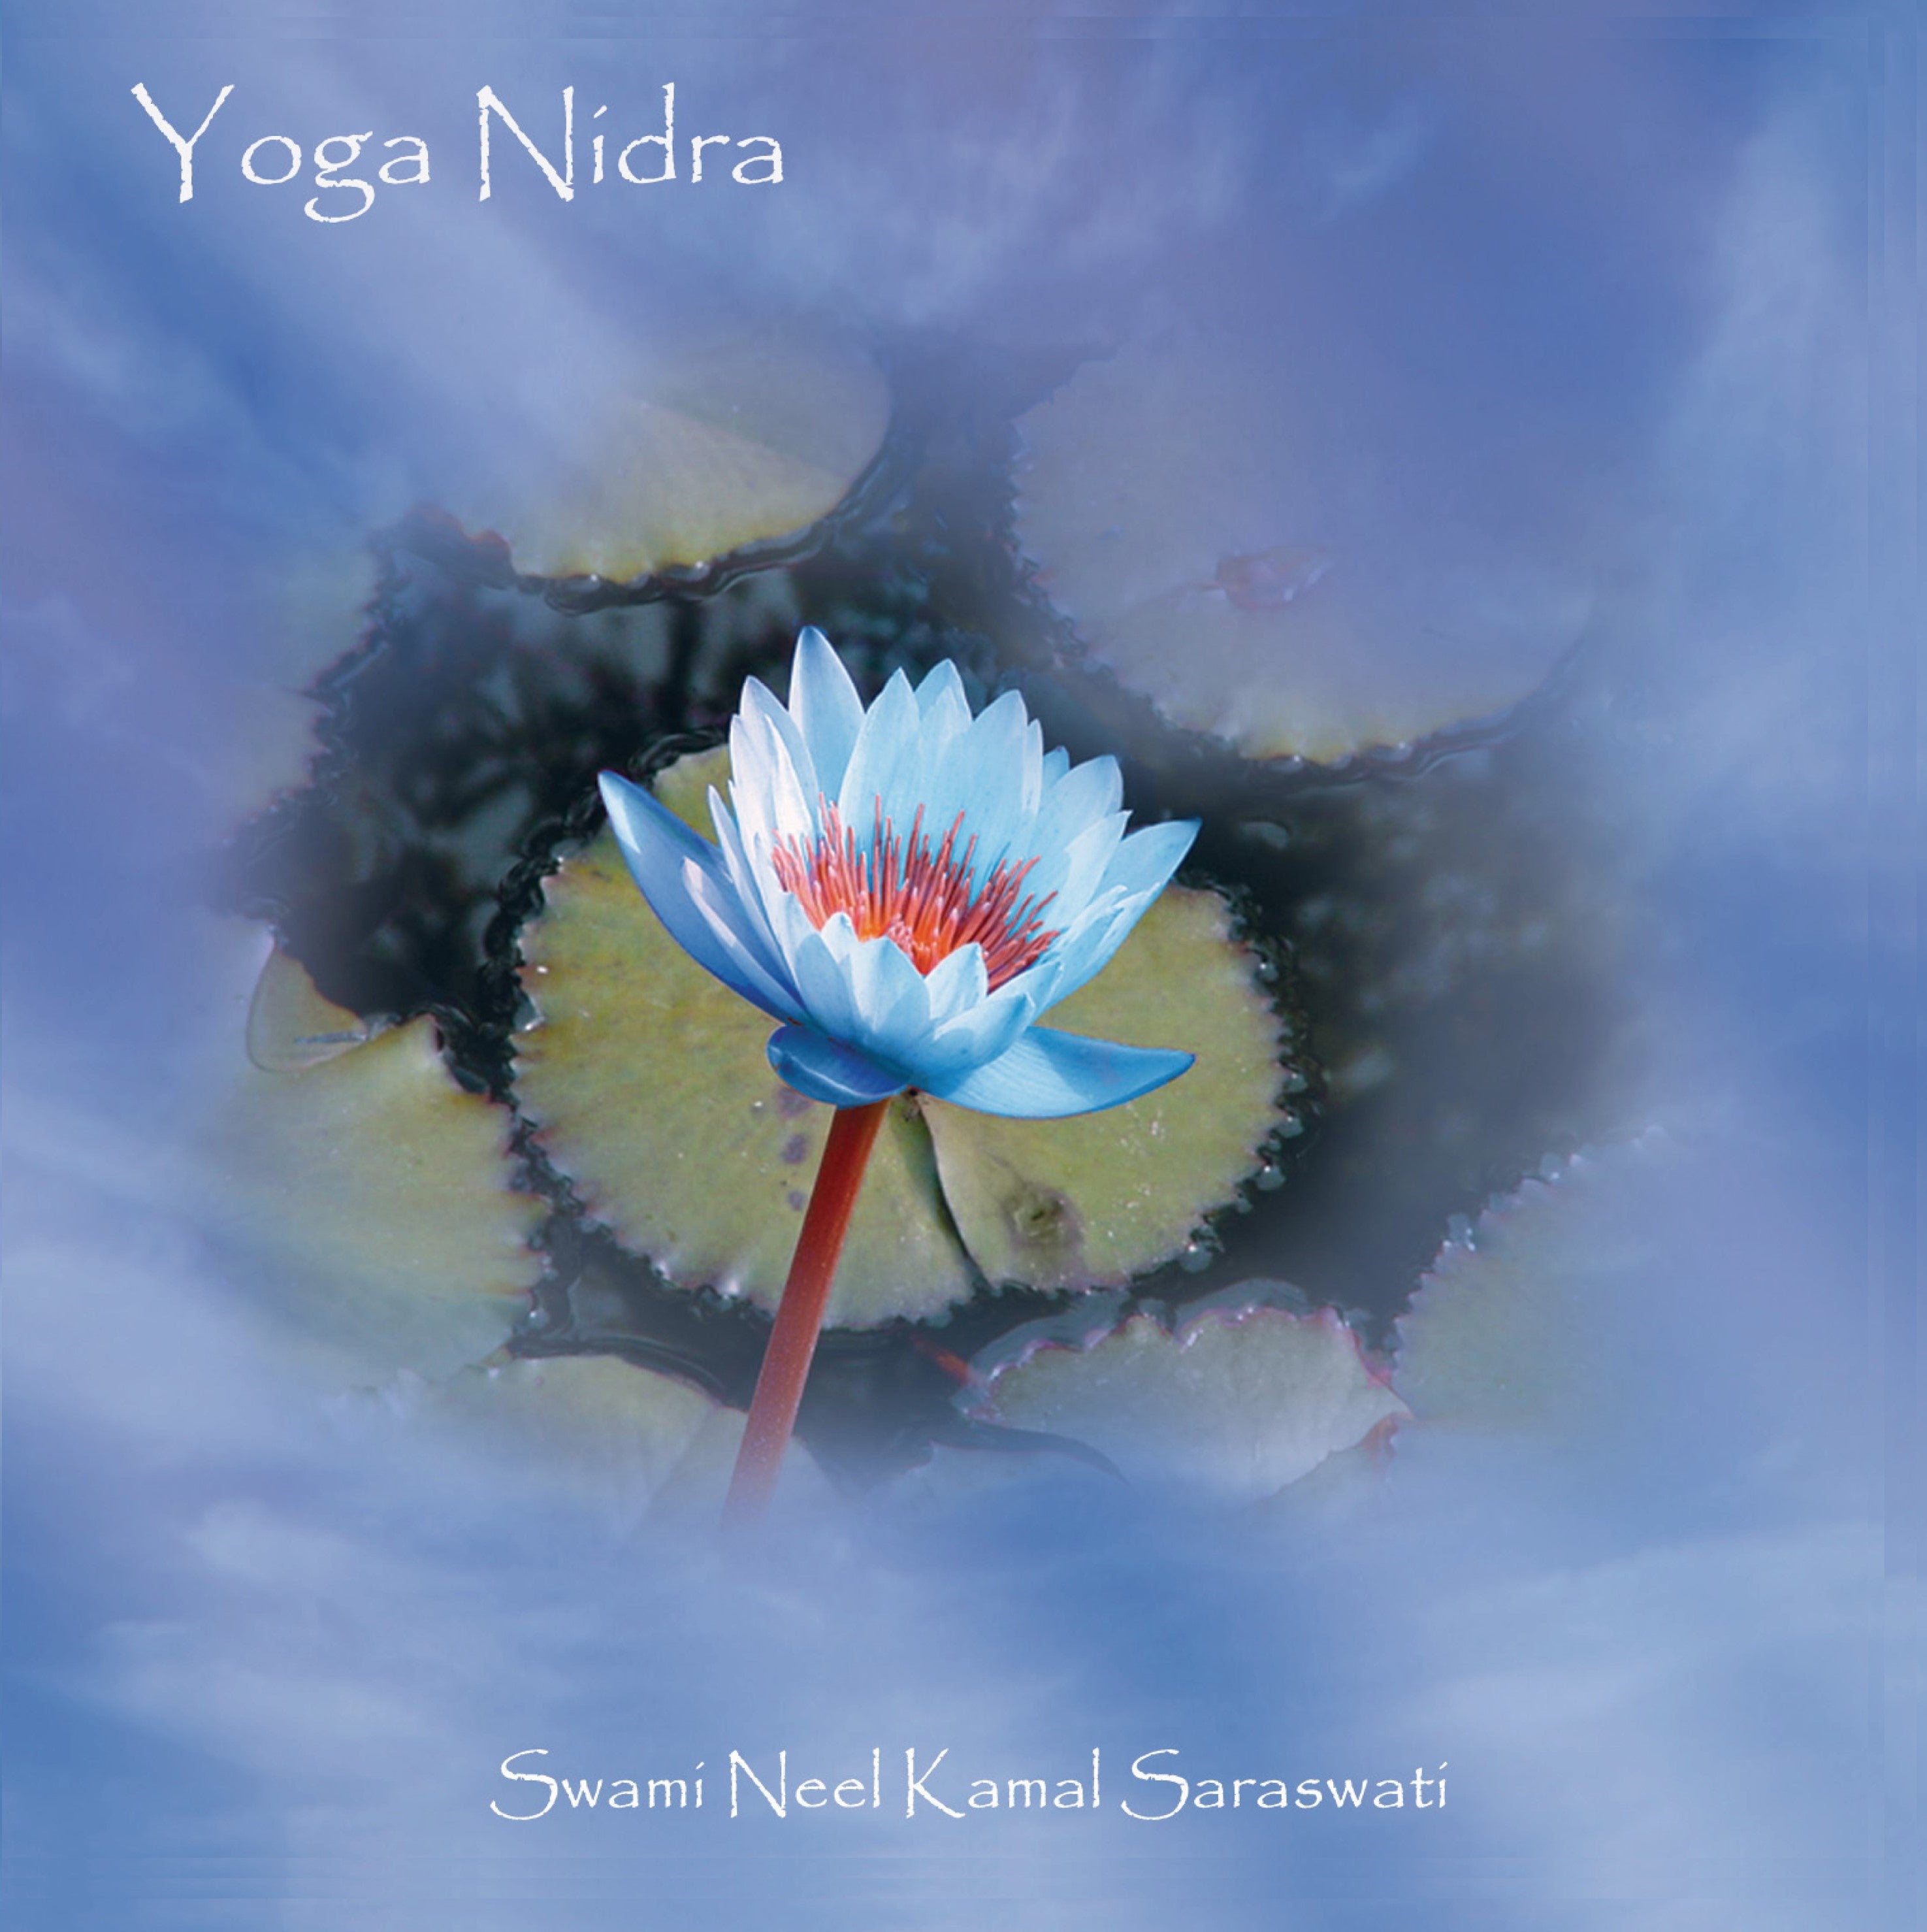 Yoga Nidra, by Swami Neel Kamal